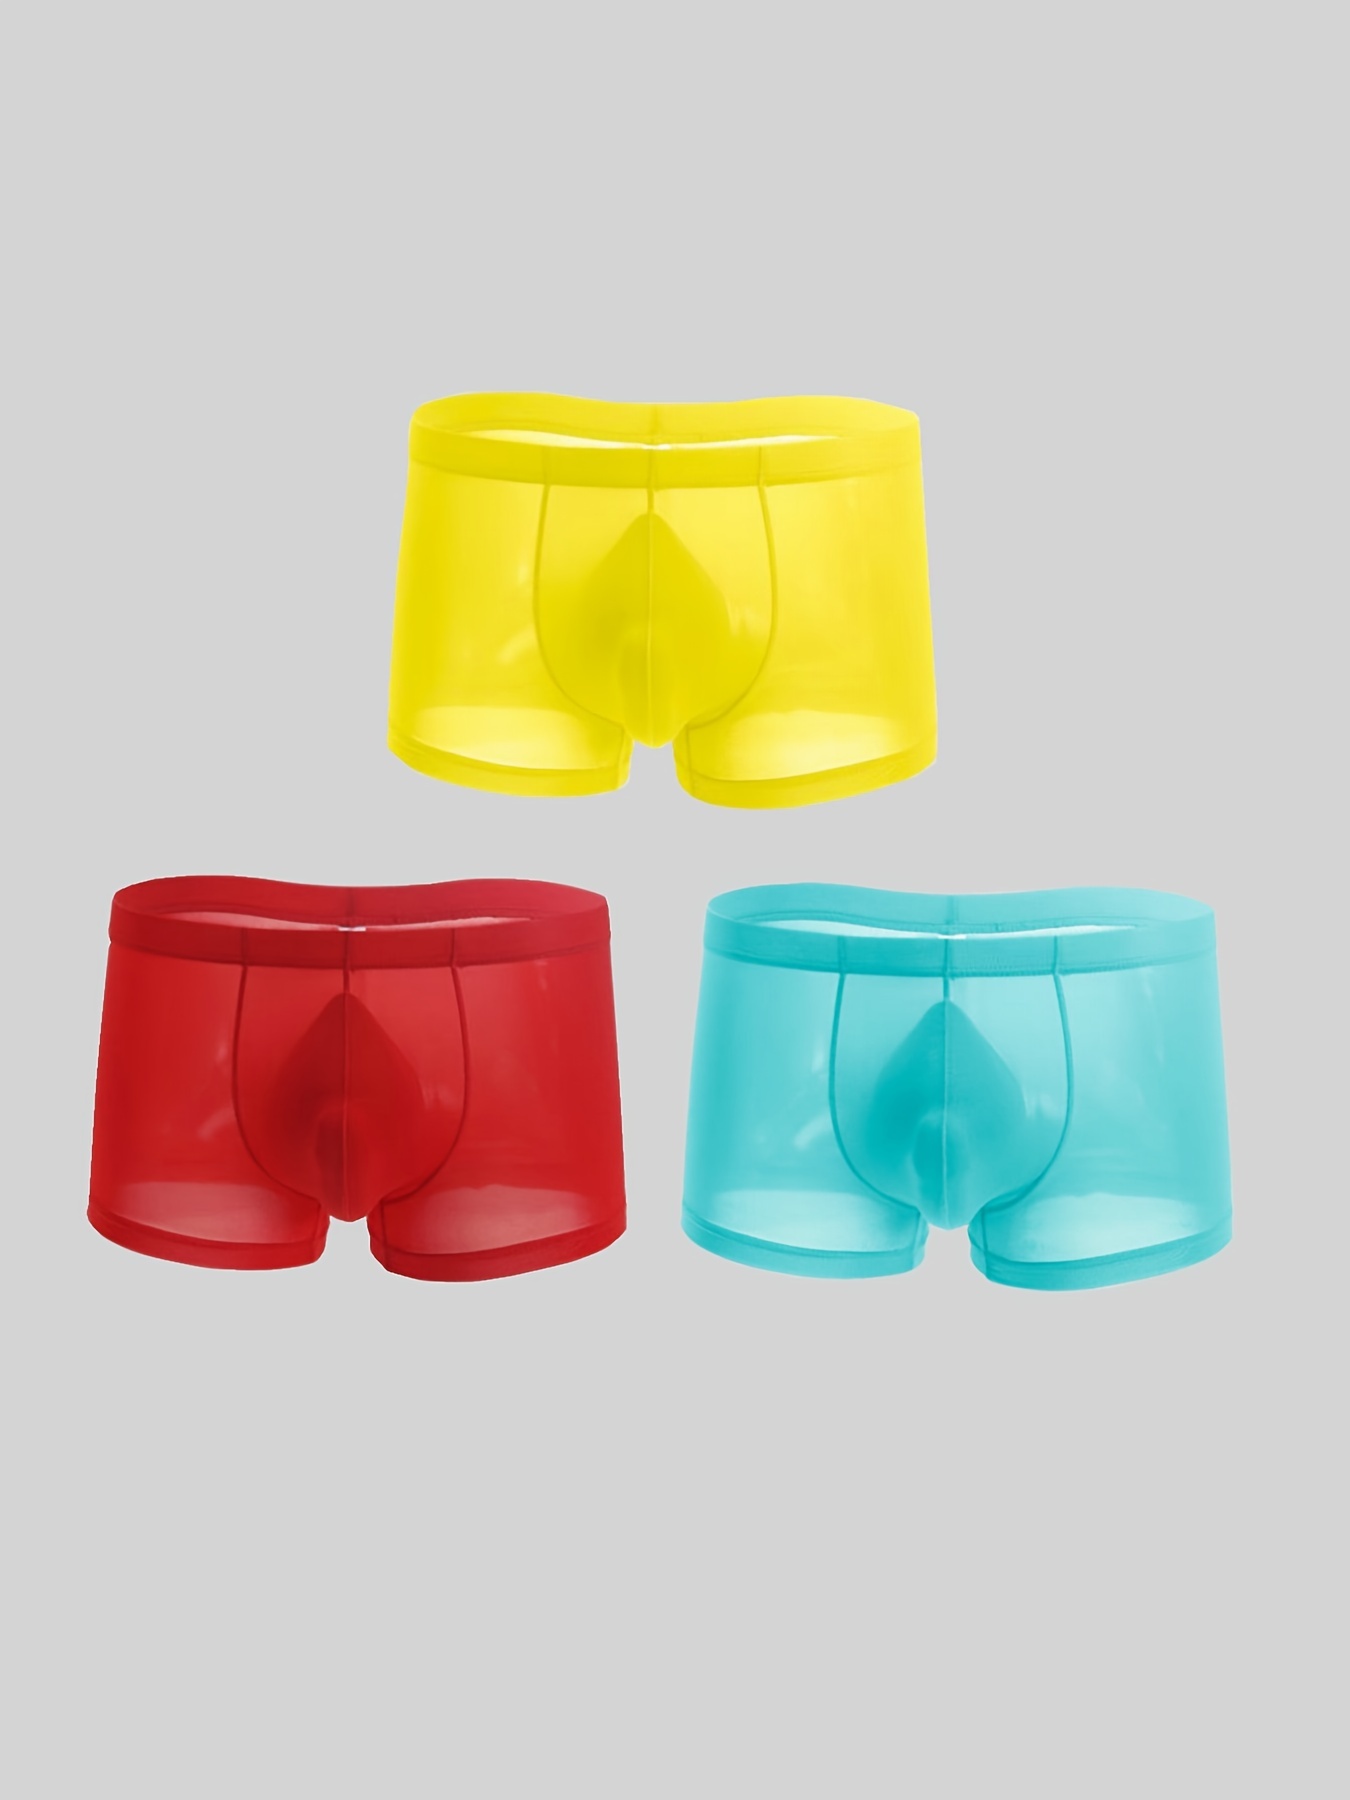 Summer Ice Silk Men Underwear Quick Dry Seamless Boxer Short Ultra